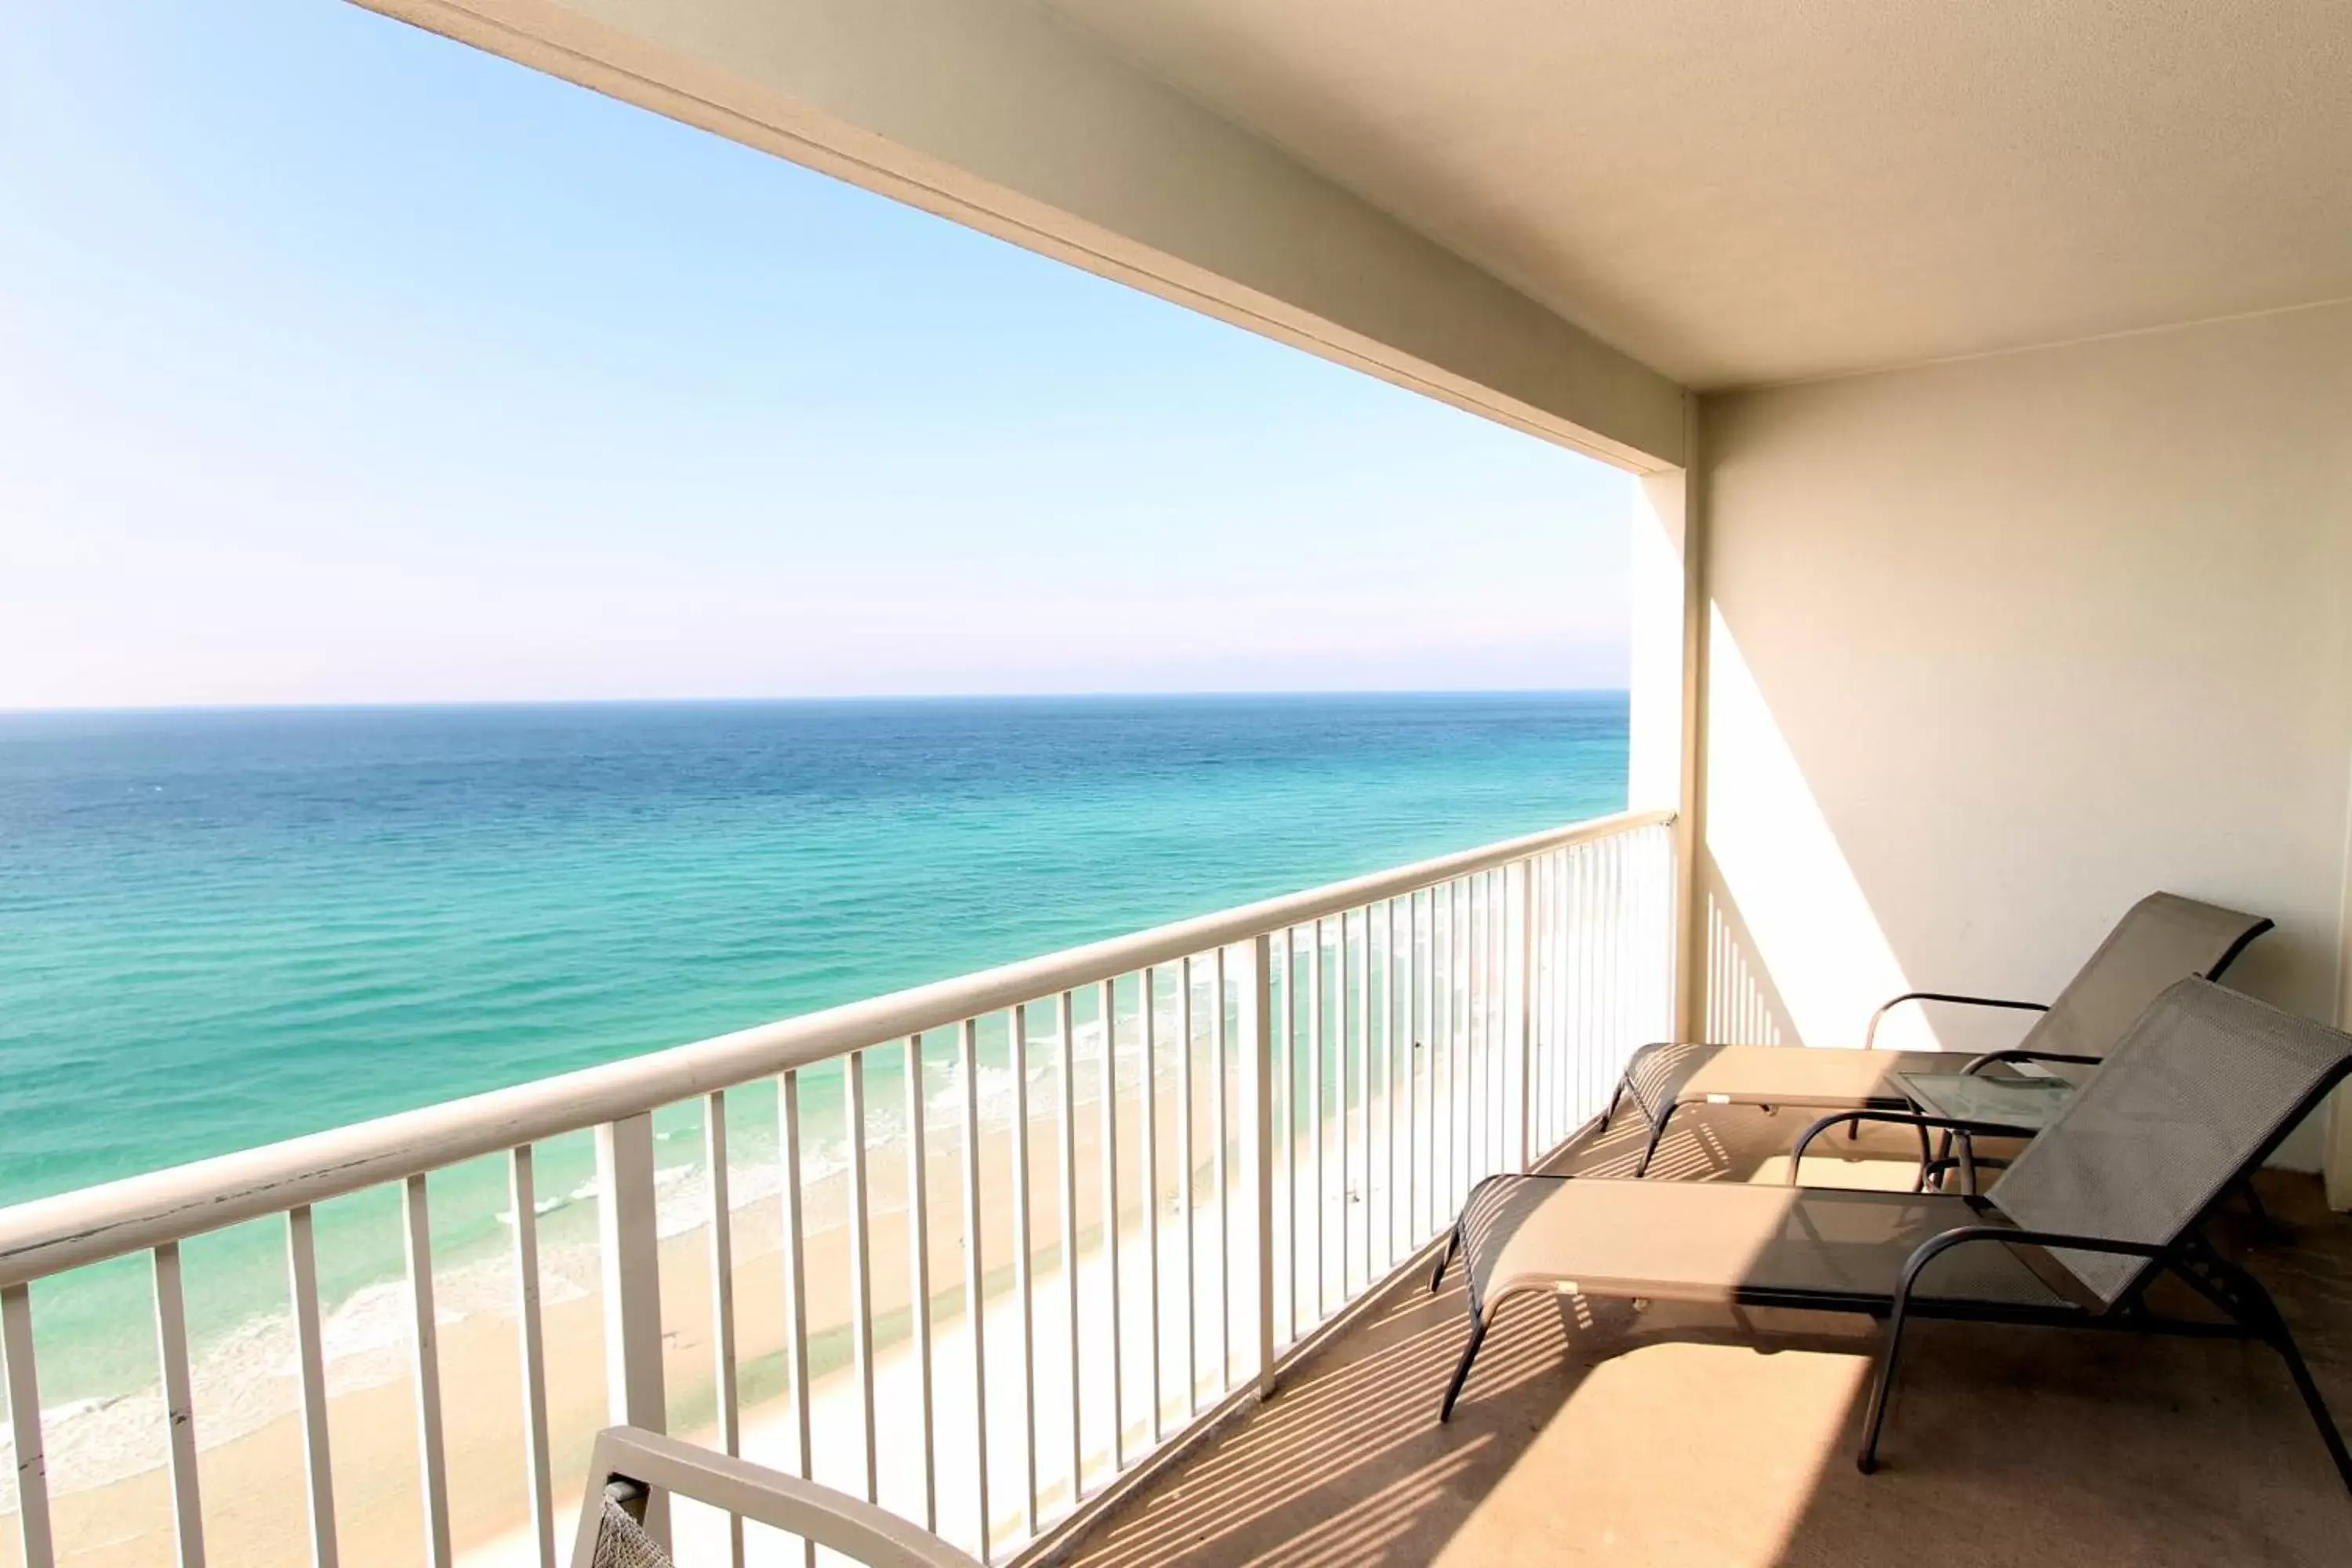 Balcony/Terrace, Sea View in Majestic Beach Resort, Panama City Beach, Fl